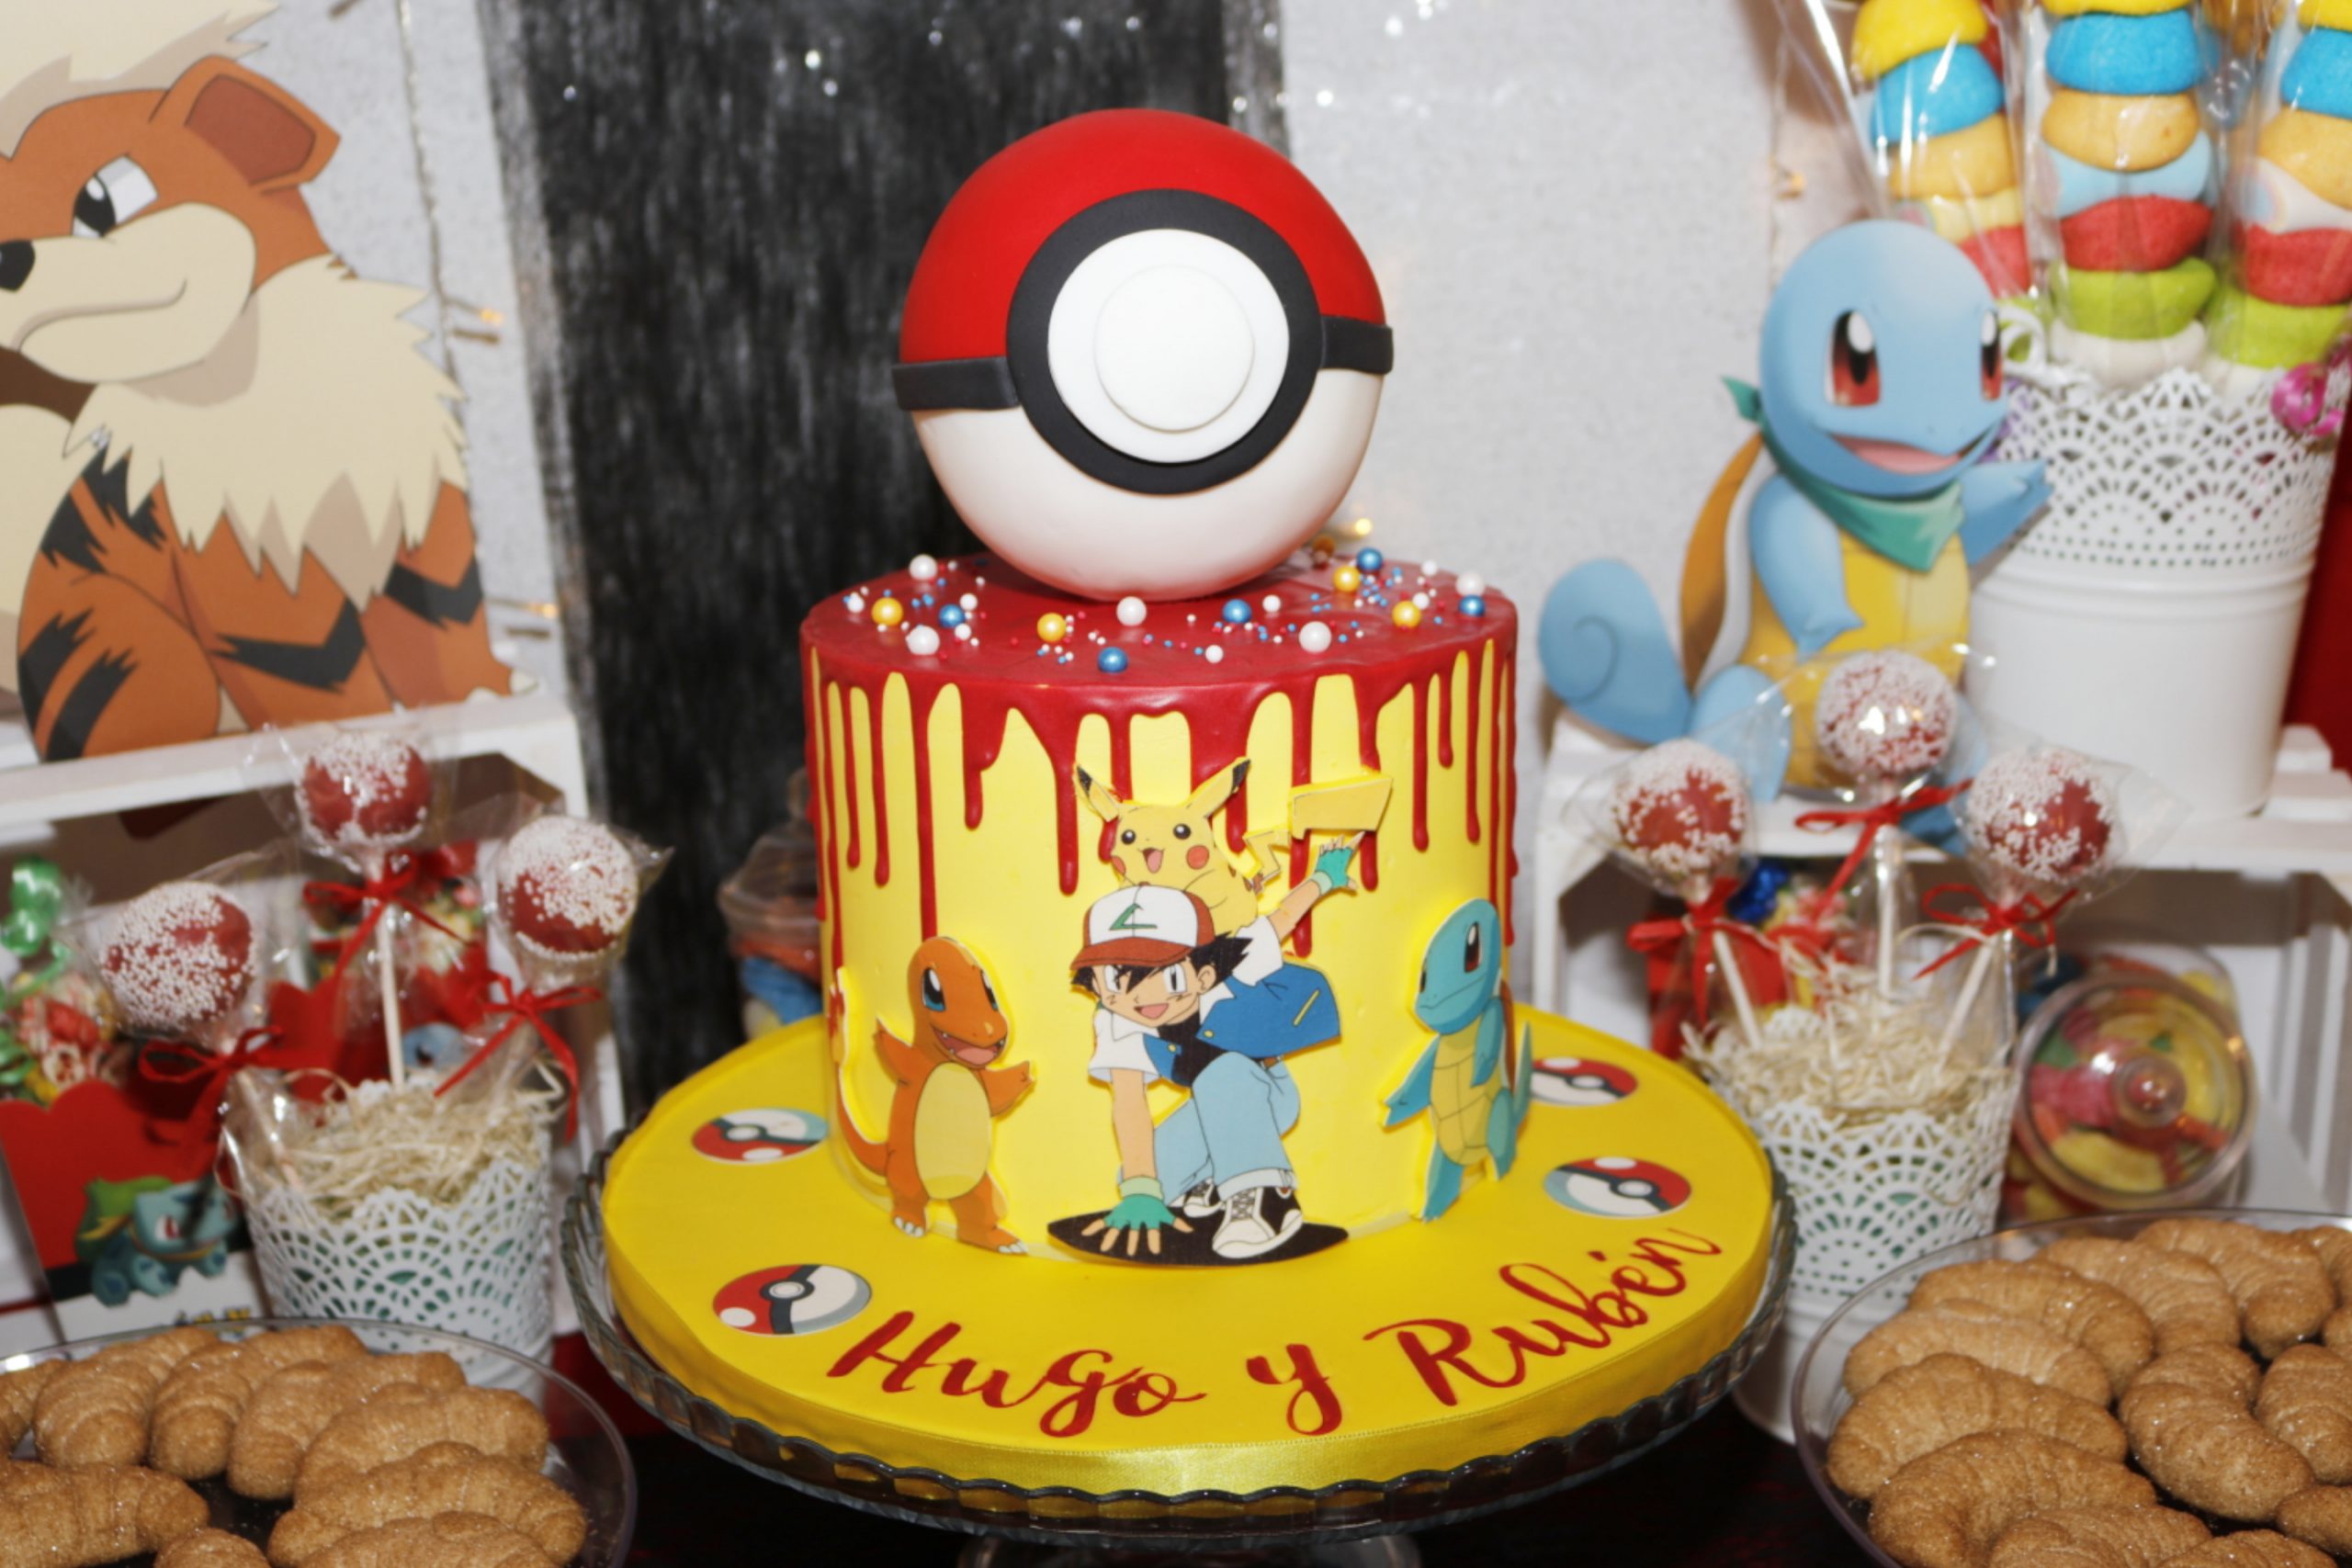 Fiesta Dulce - El cumpleaños Pokemon de Cristóbal